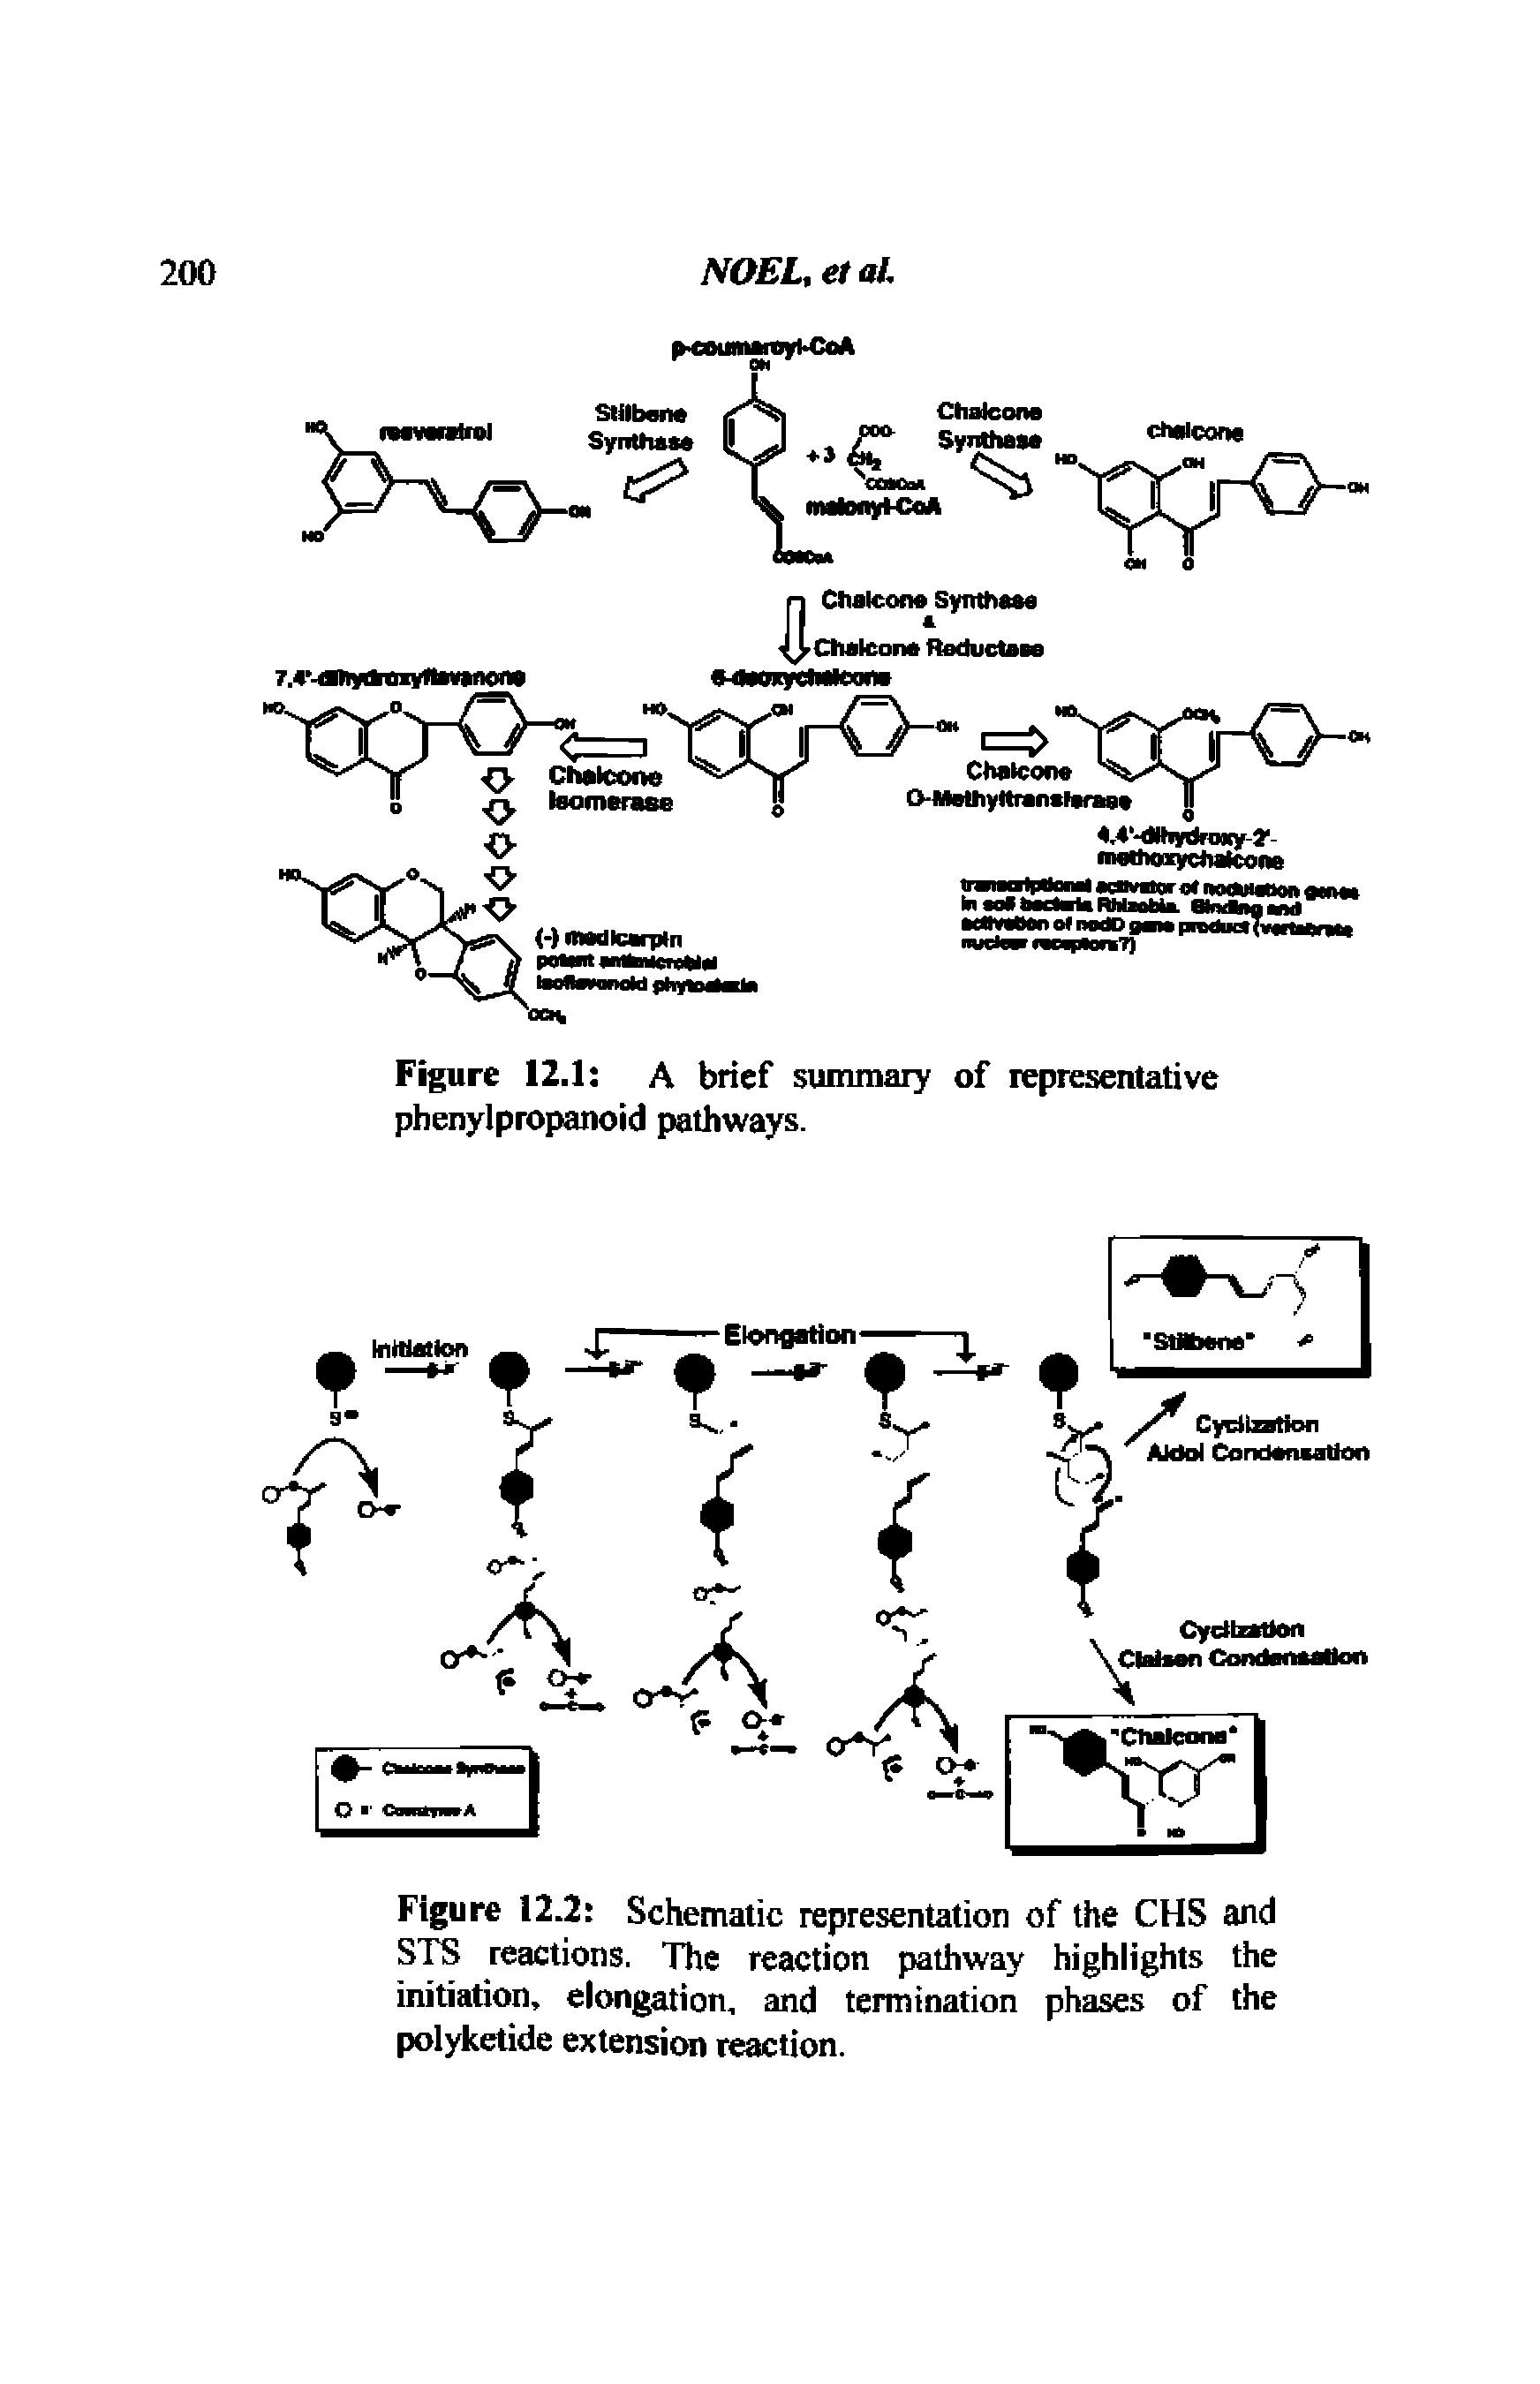 Figure 12.1 A brief summary of representative phenylpropanoid pathways.